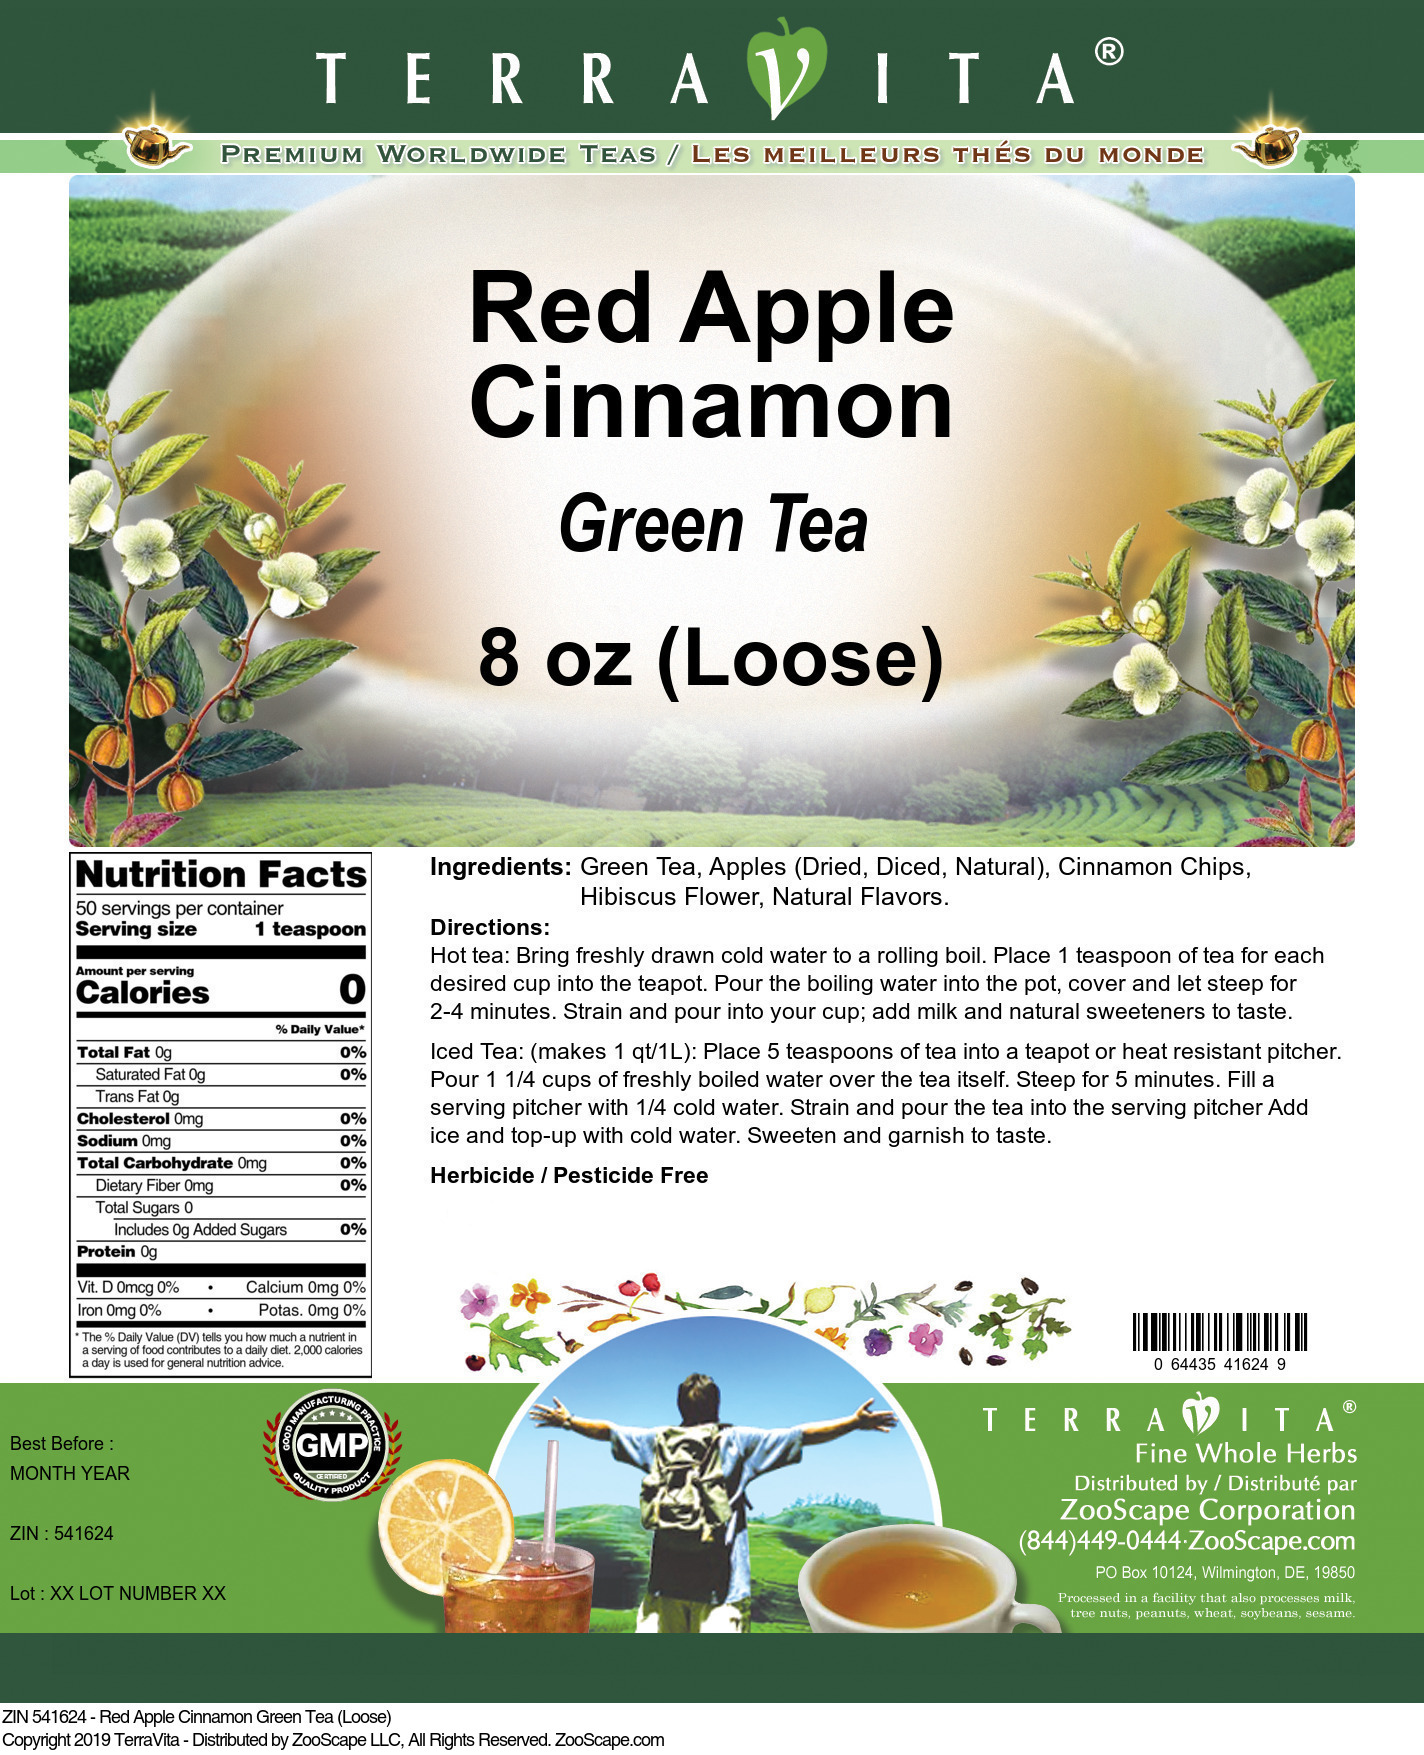 Red Apple Cinnamon Green Tea (Loose) - Label